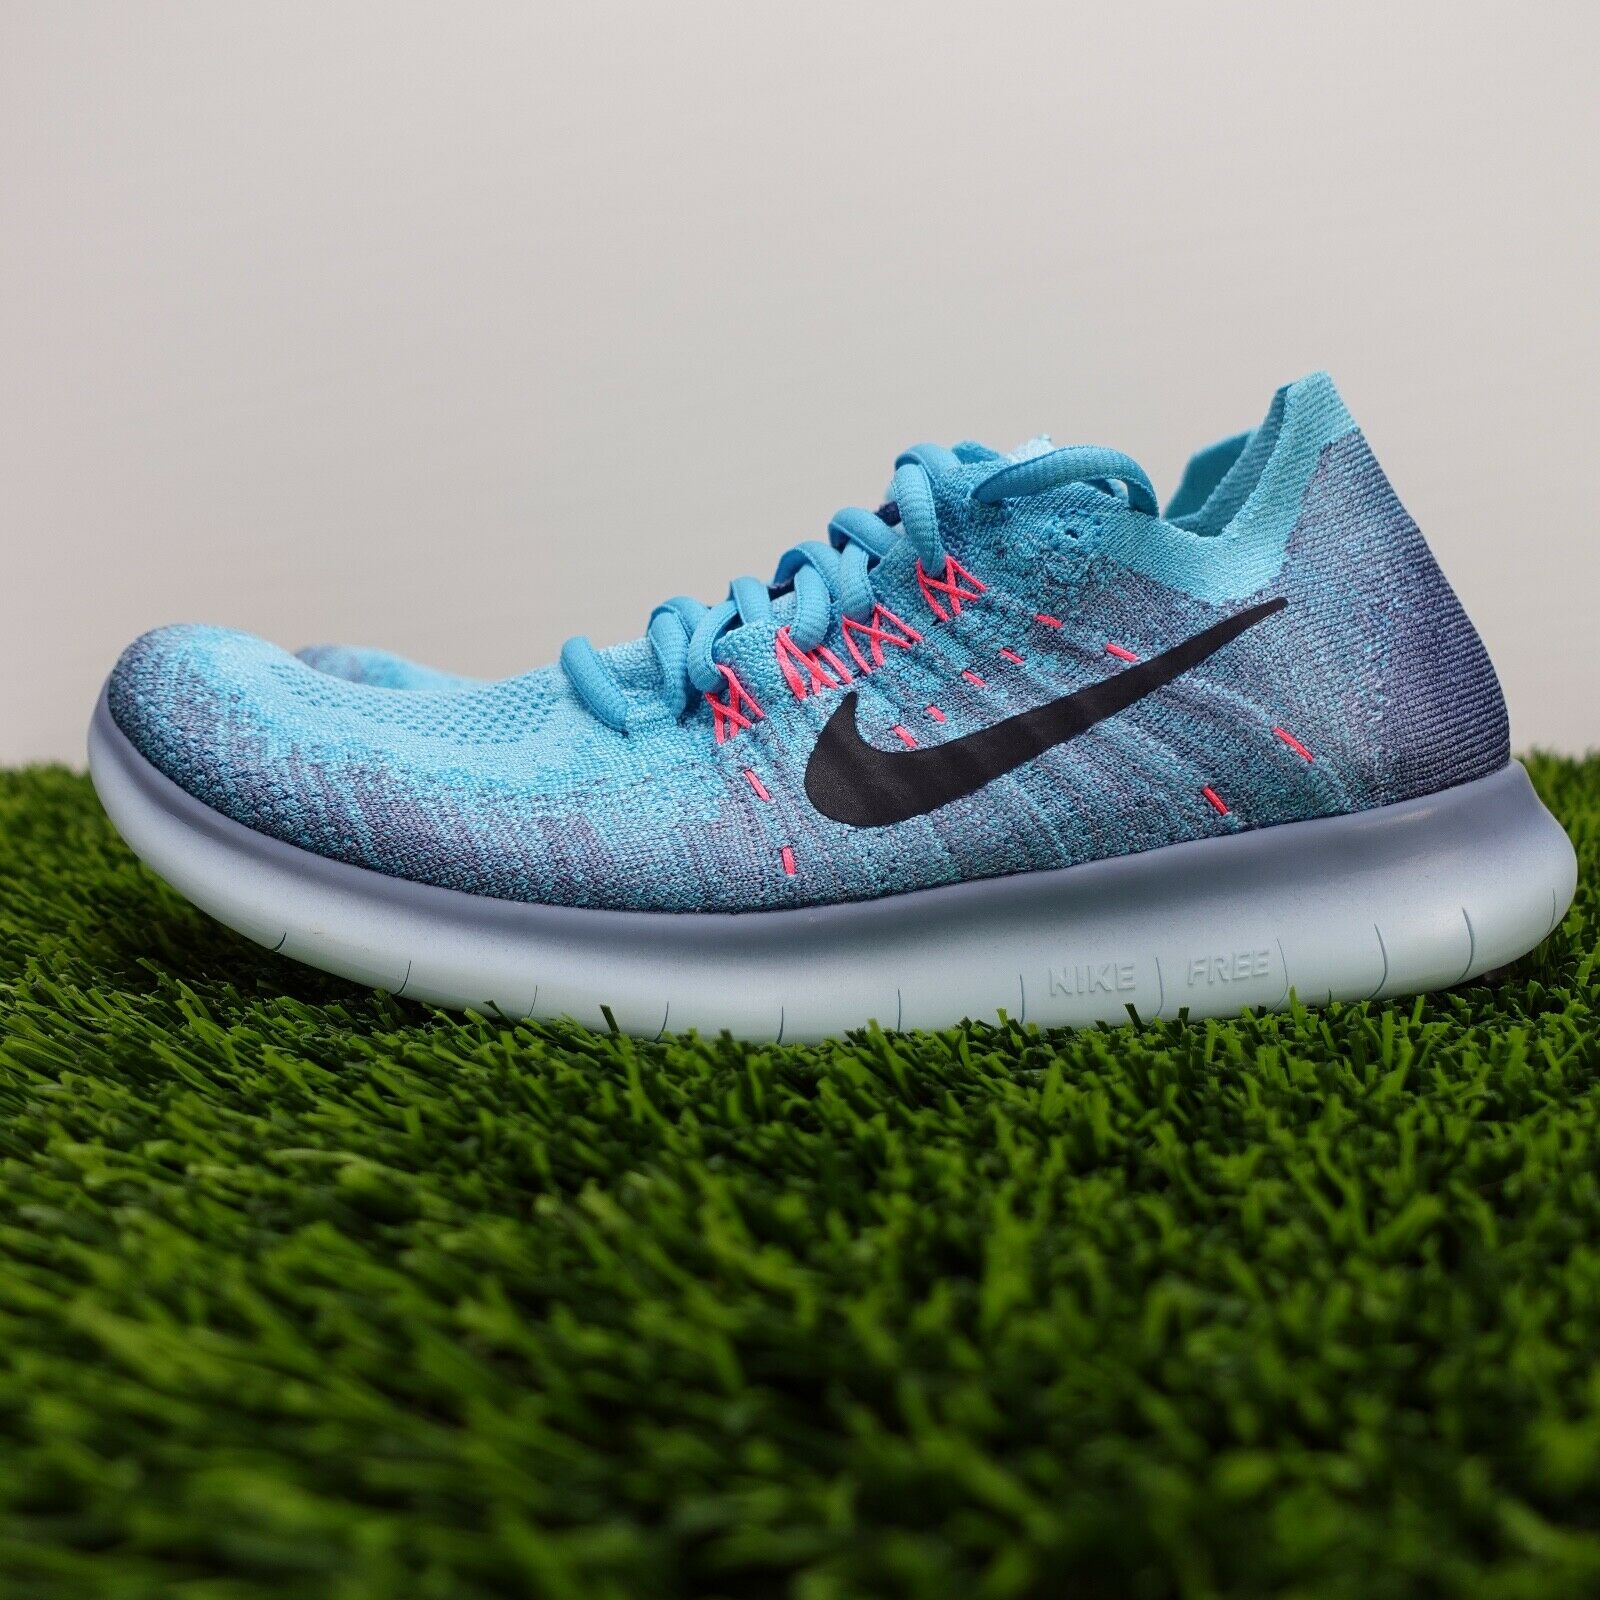 Nike Free RN Flyknit 2017 Women's Running Shoes Blue Pink 880844-400 Size 7.5